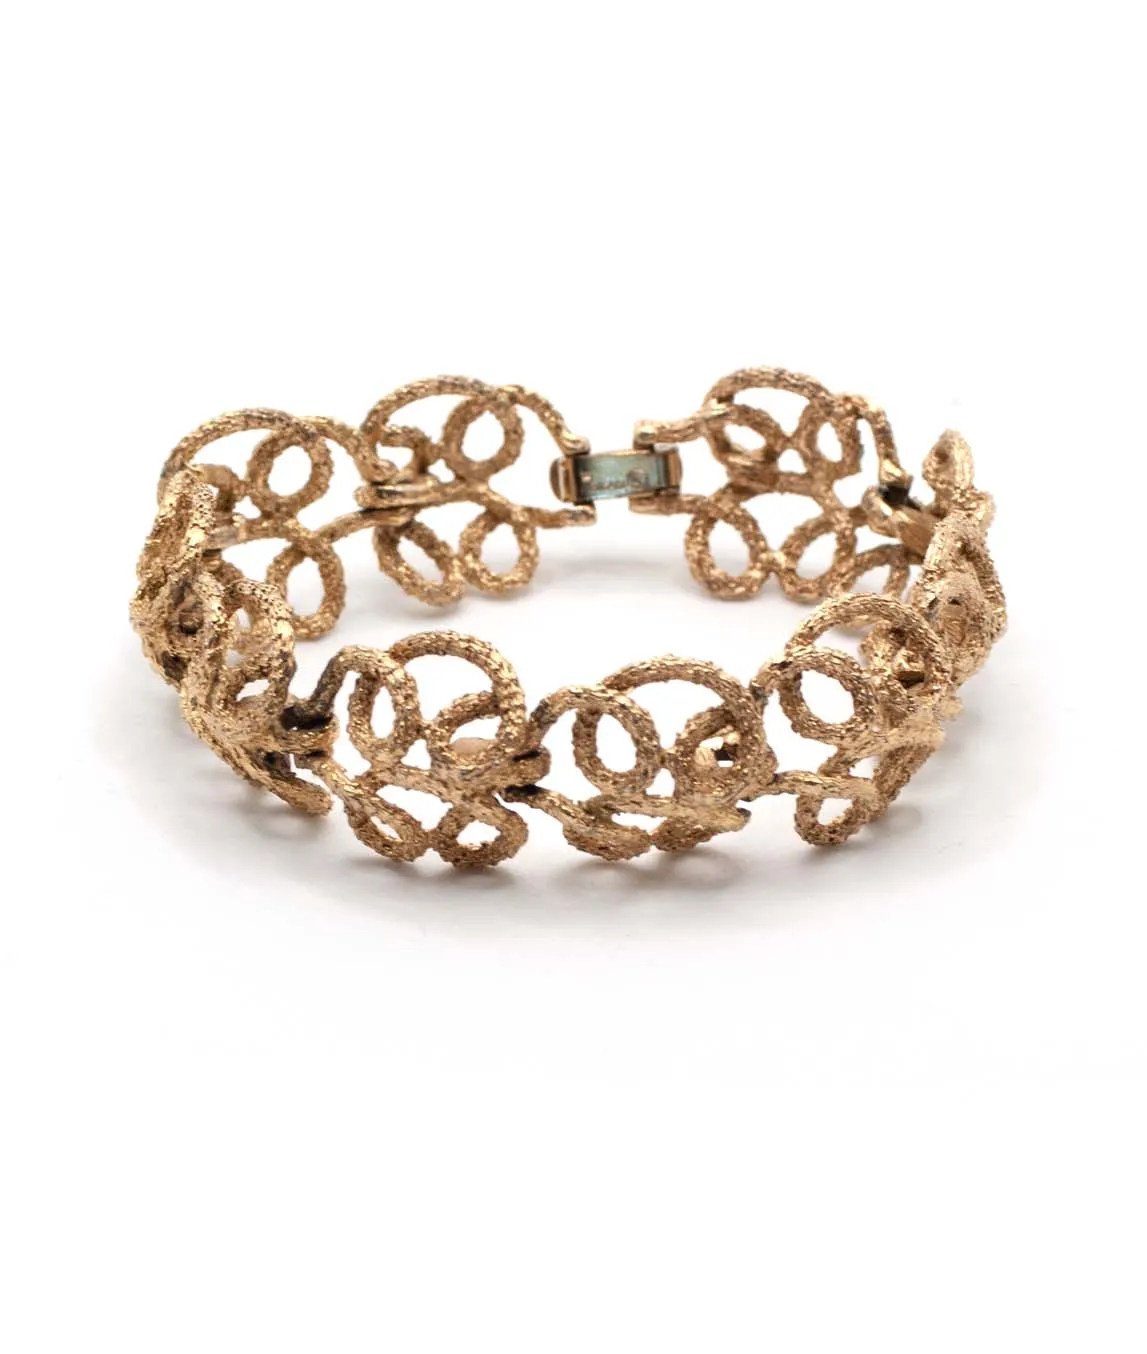 Crown Trifari gold coloured bracelet